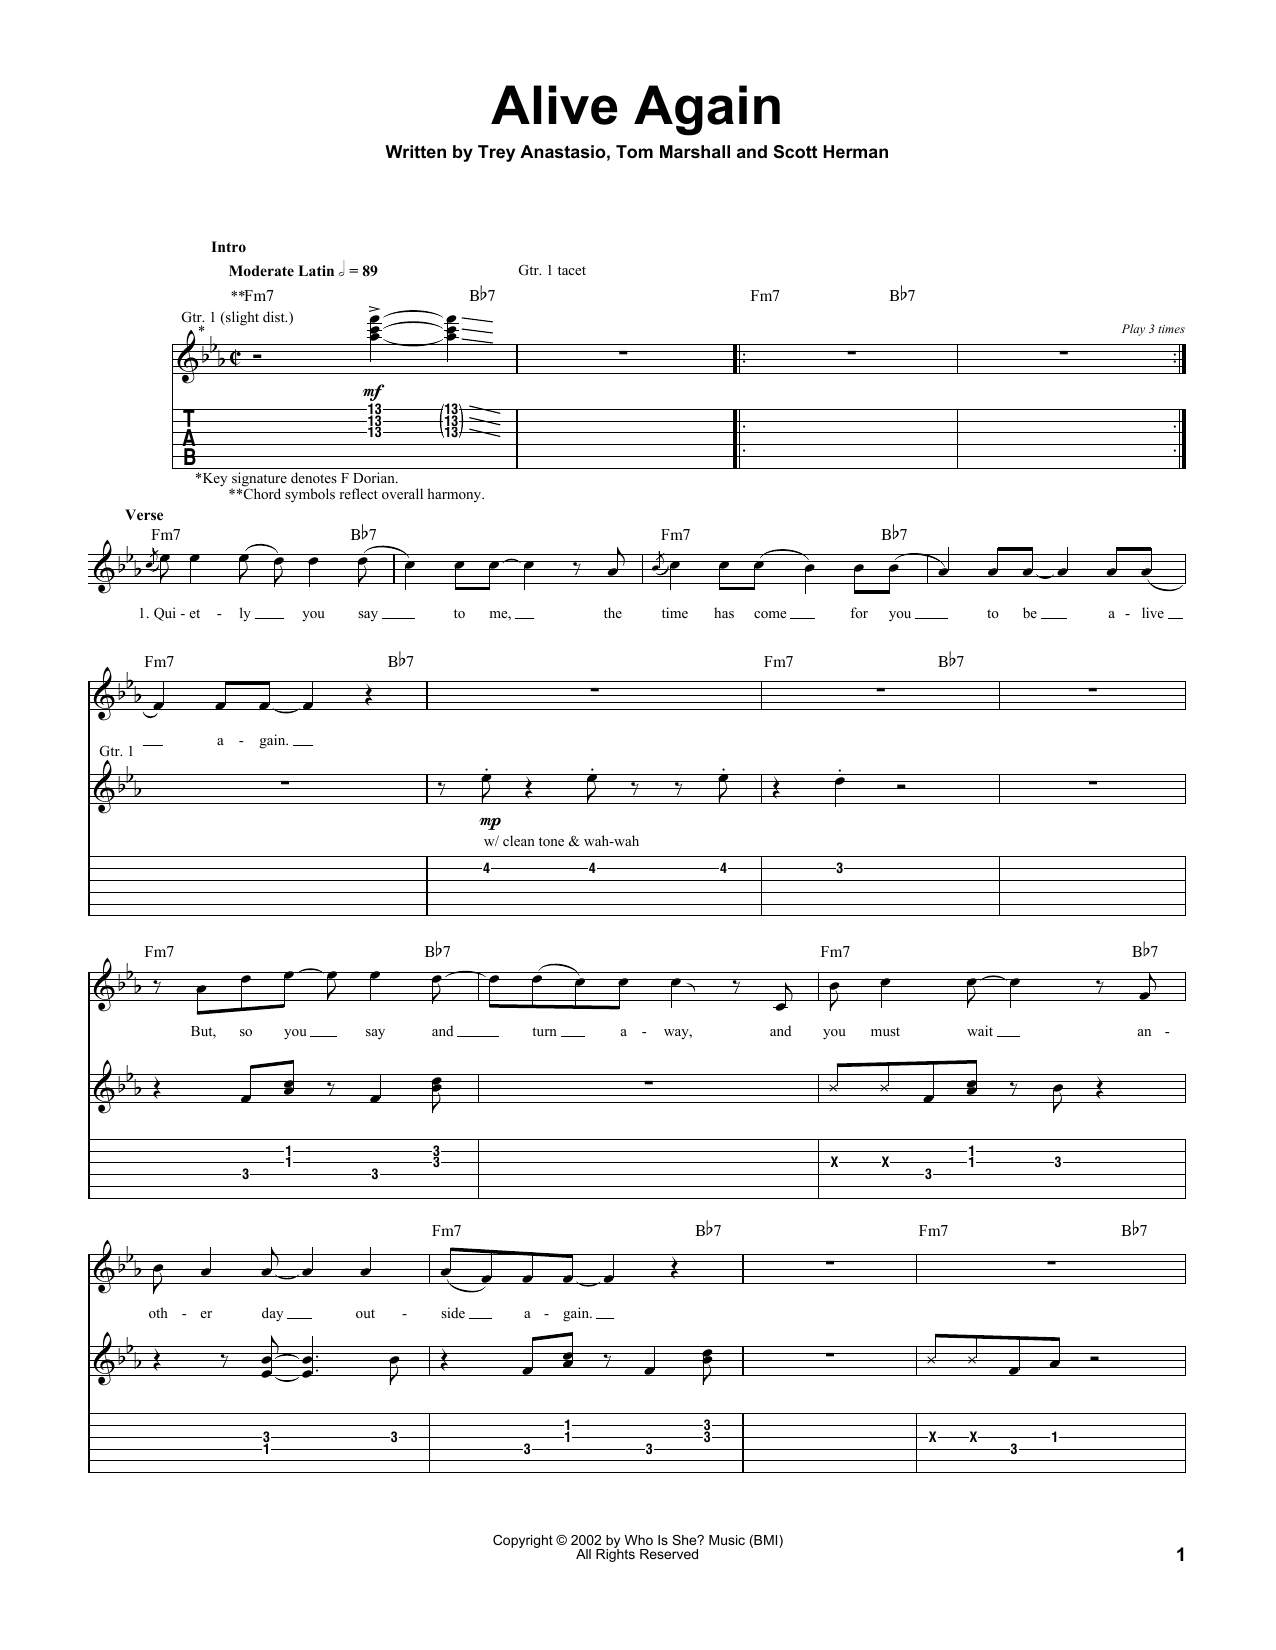 Trey Anastasio Alive Again Sheet Music Notes & Chords for Guitar Tab - Download or Print PDF